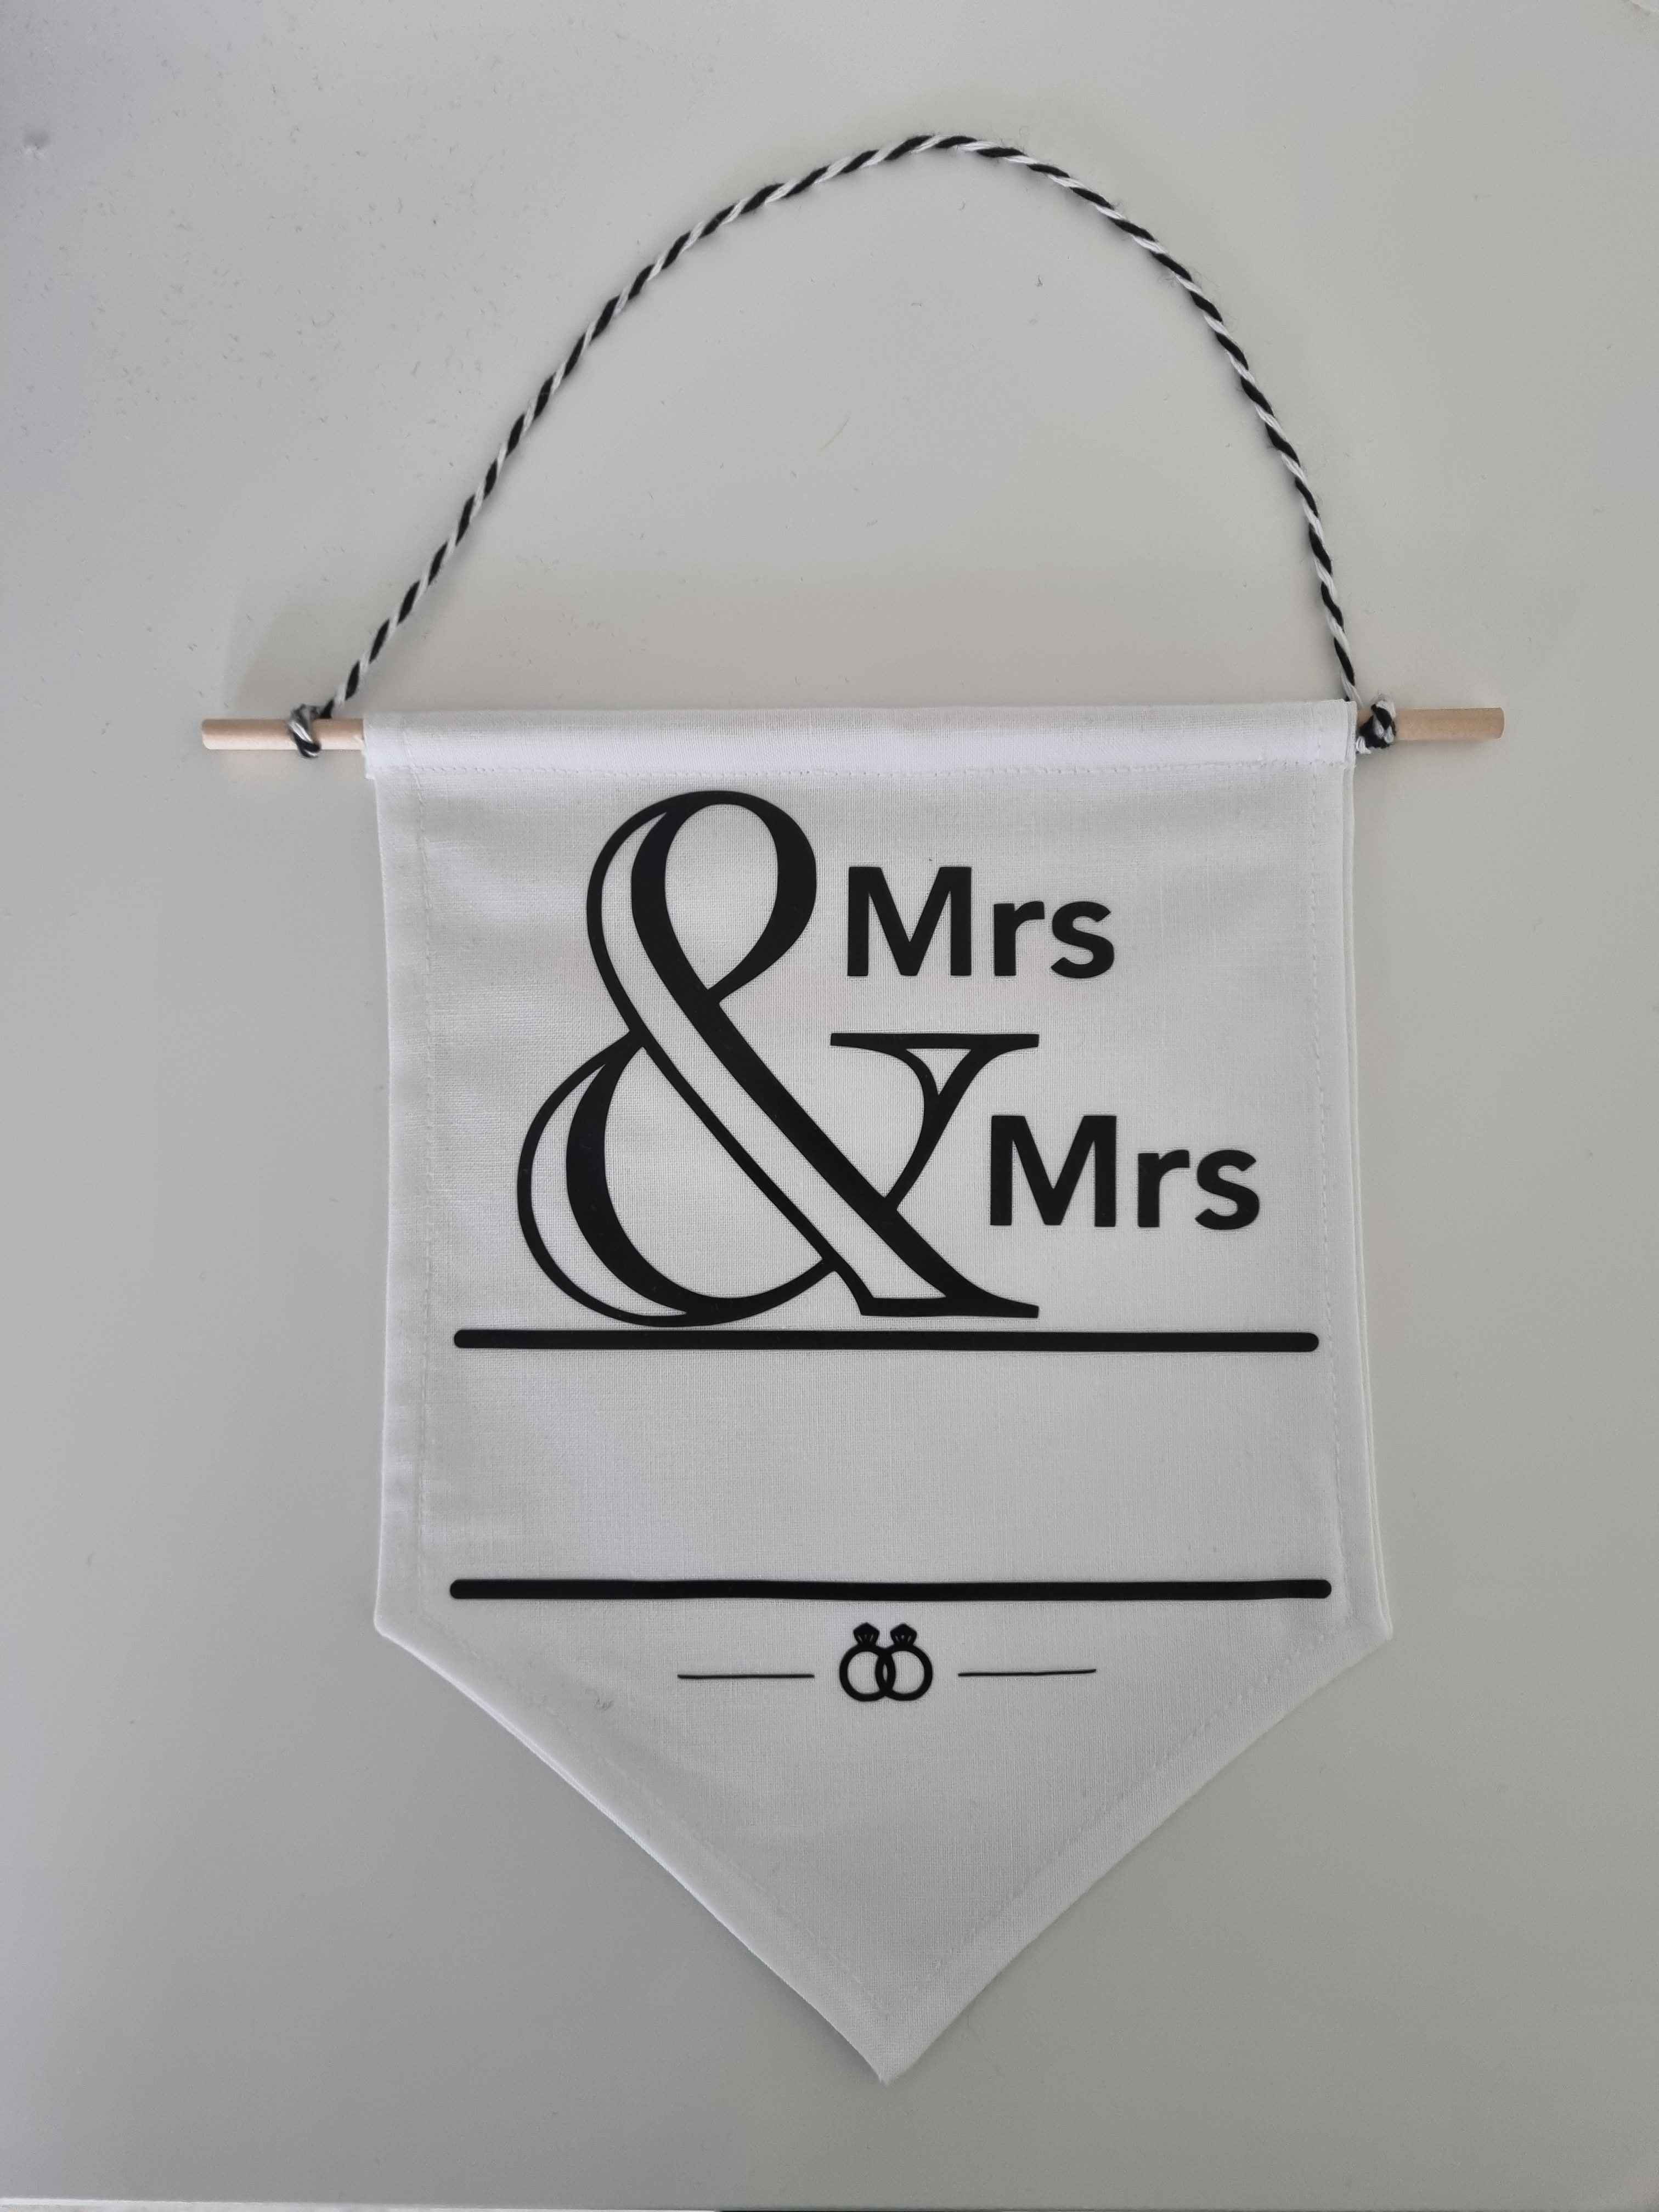 HANDMADE FABRIC WALL HANGING/FLAG - WEDDING - MRS & MRS - HOME DECOR - GIFT